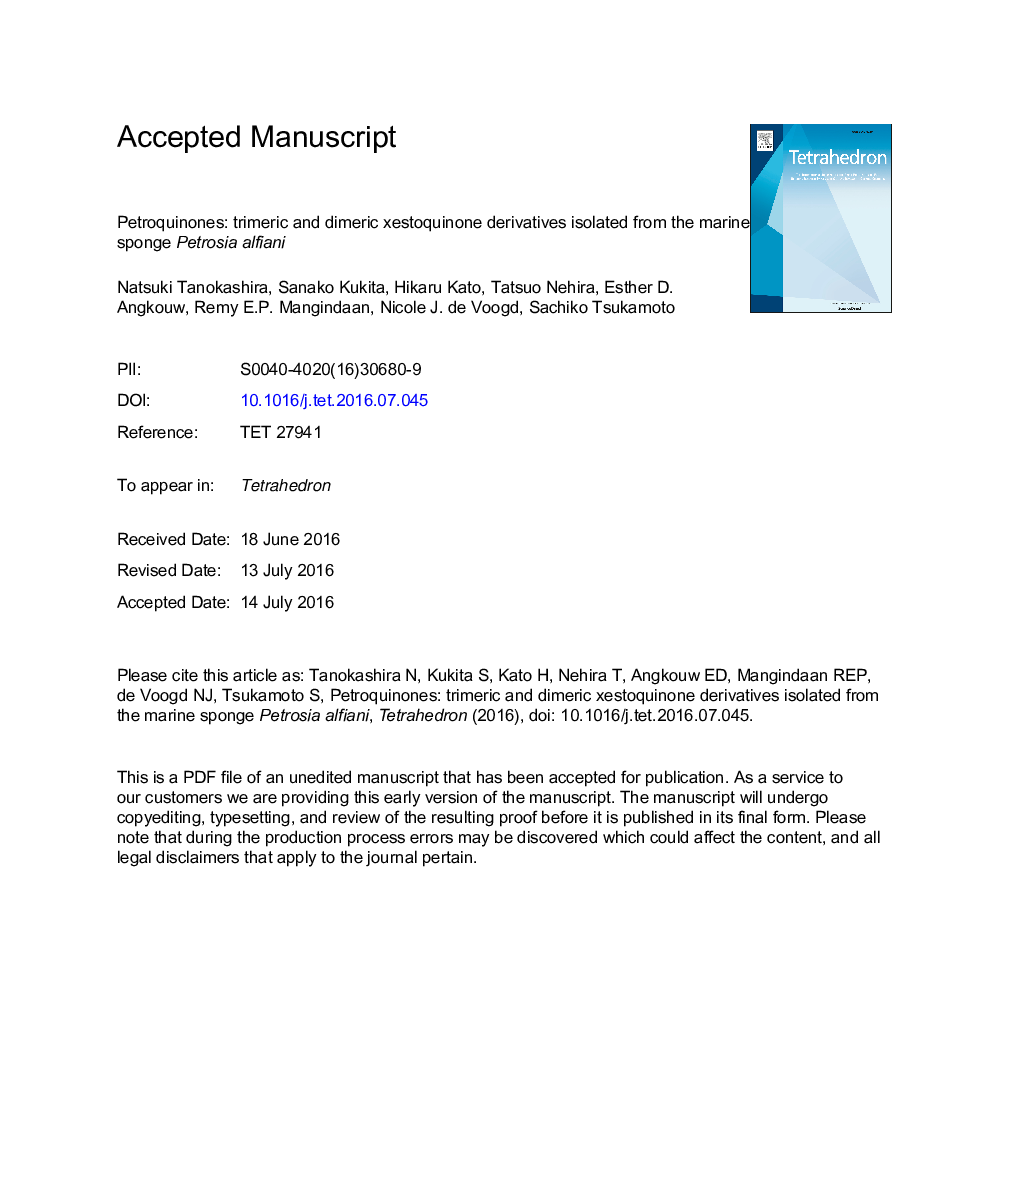 Petroquinones: trimeric and dimeric xestoquinone derivatives isolated from the marine sponge Petrosia alfiani